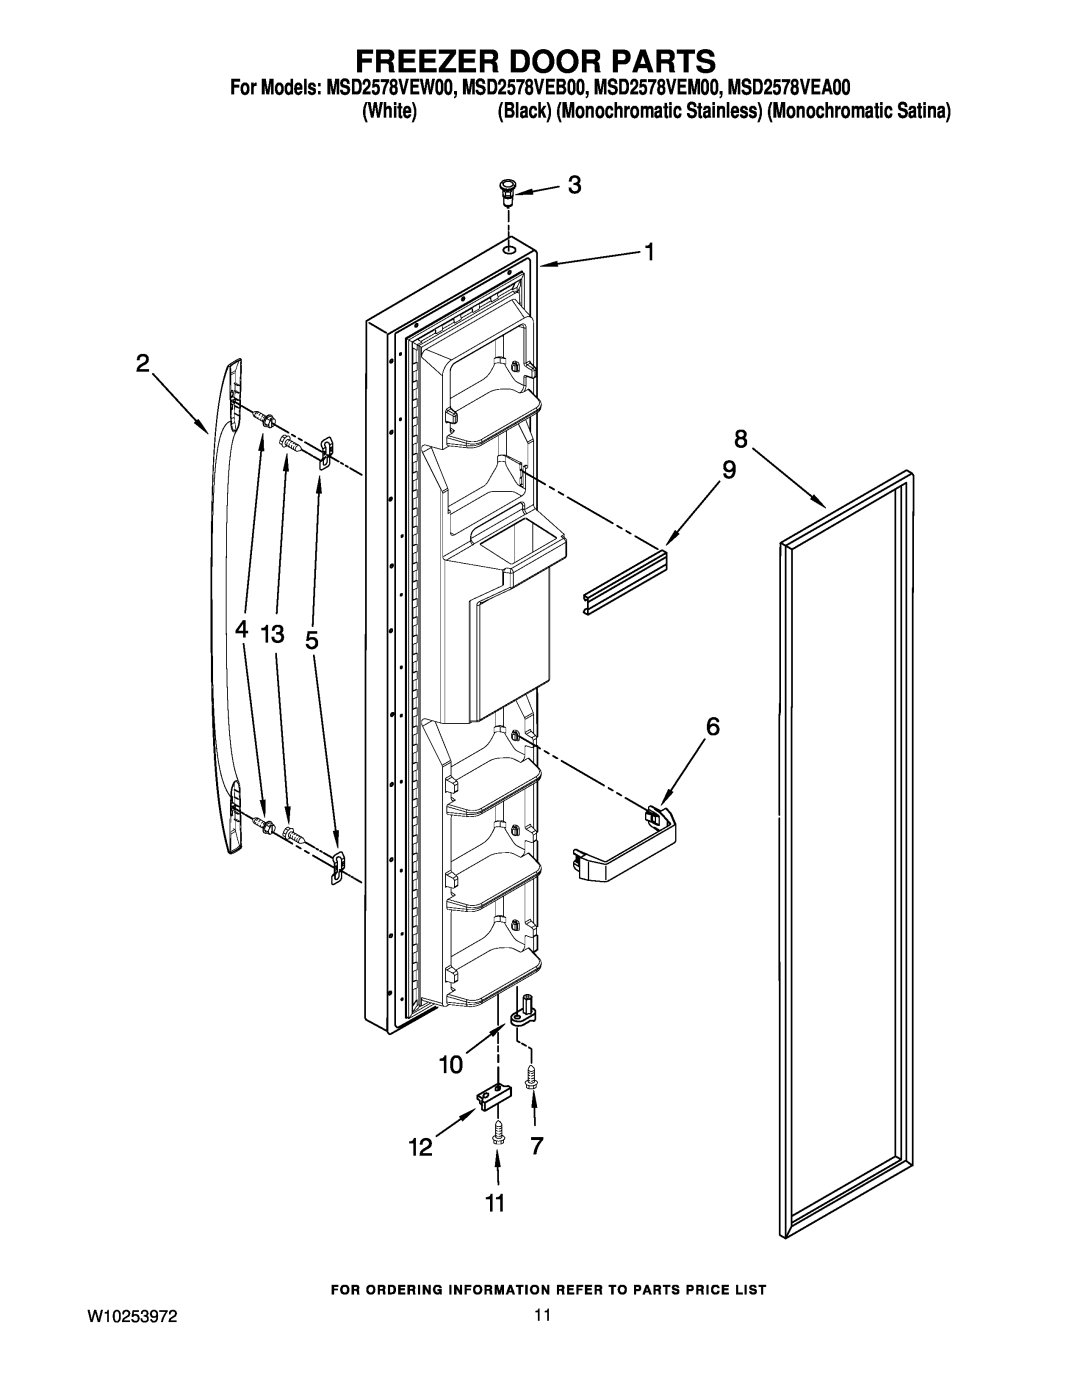 Maytag manual Freezer Door Parts, For Models MSD2578VEW00, MSD2578VEB00, MSD2578VEM00, MSD2578VEA00, White 